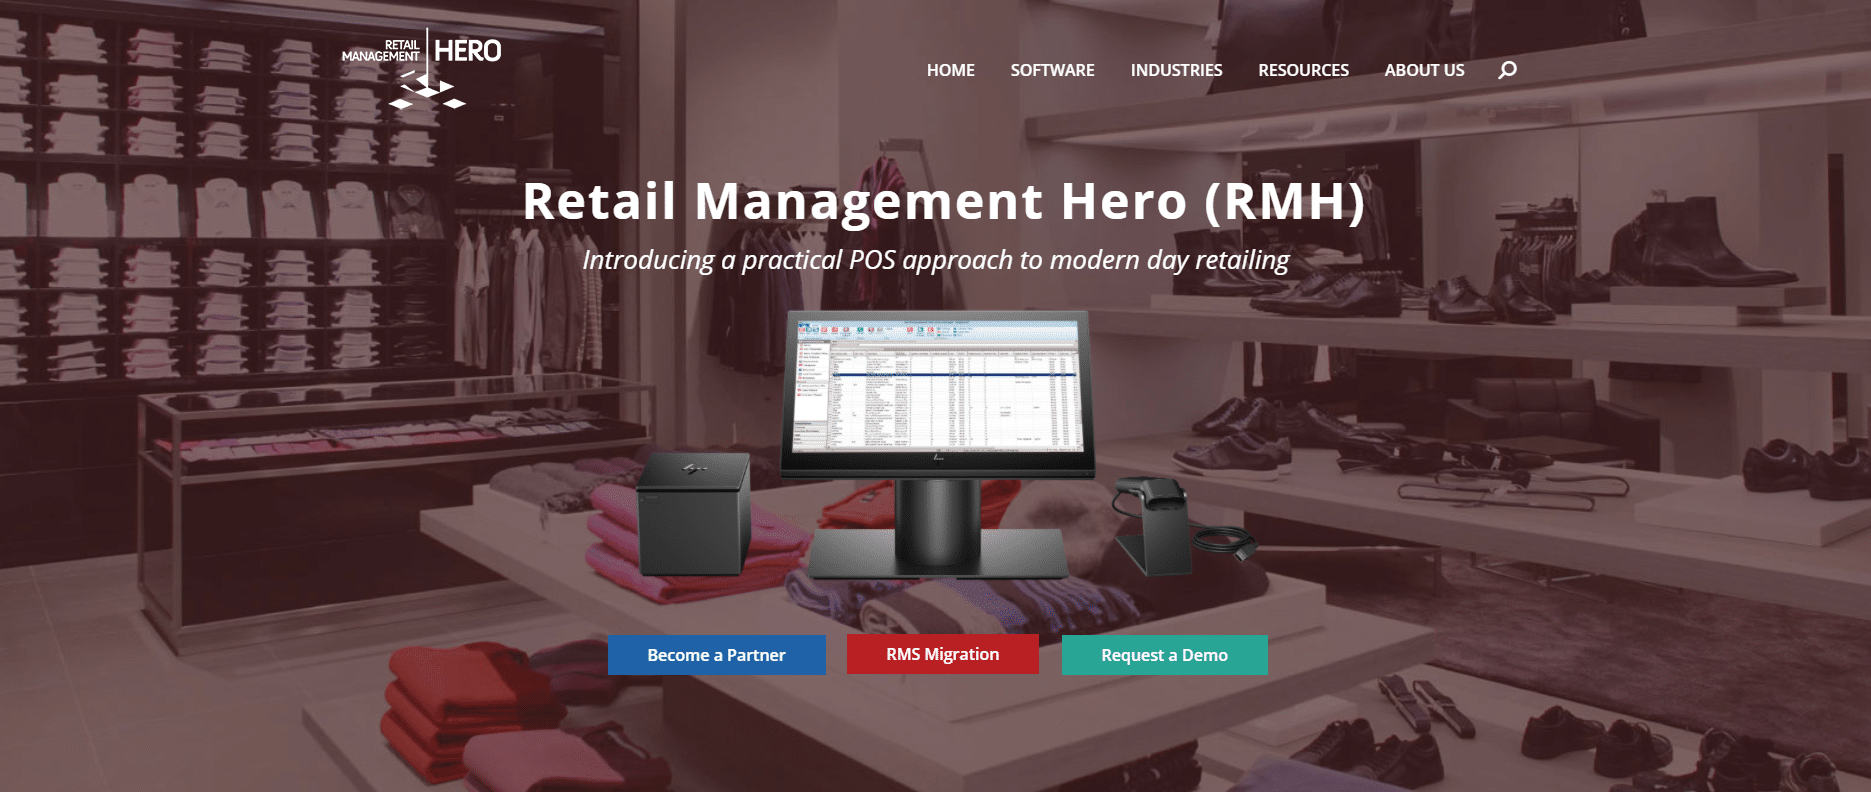 Retail Management Hero (RMH)